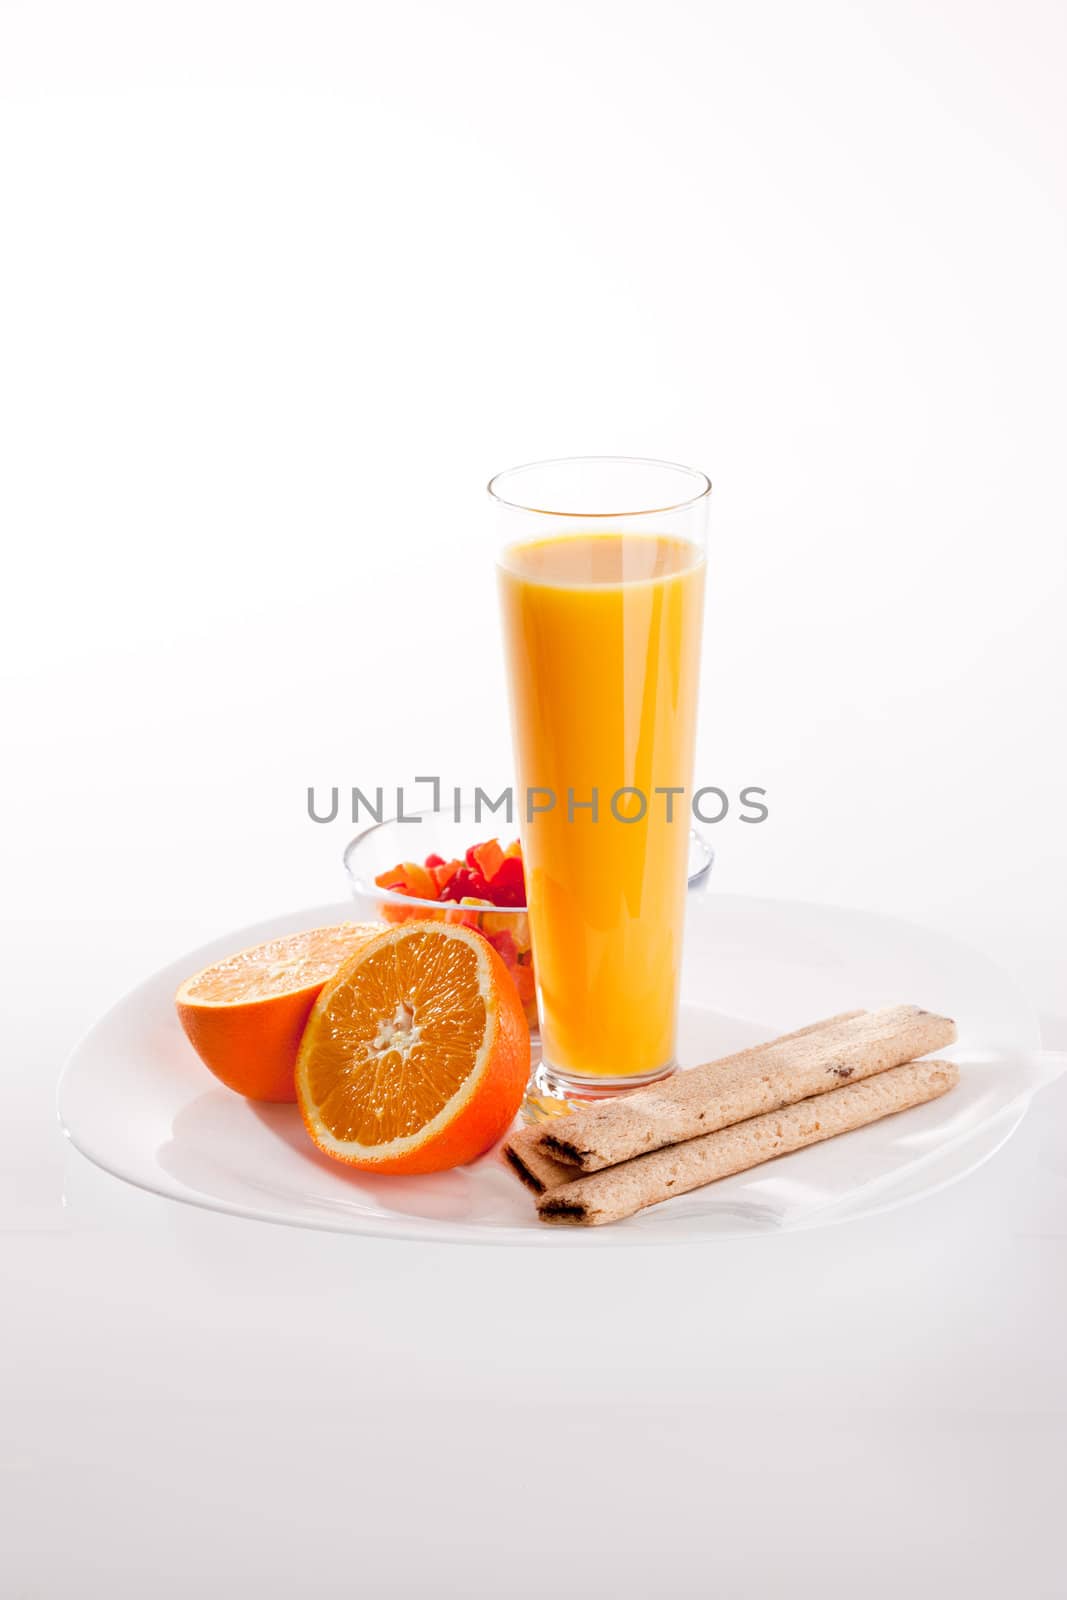 food series: ripe sliced orange with pastry